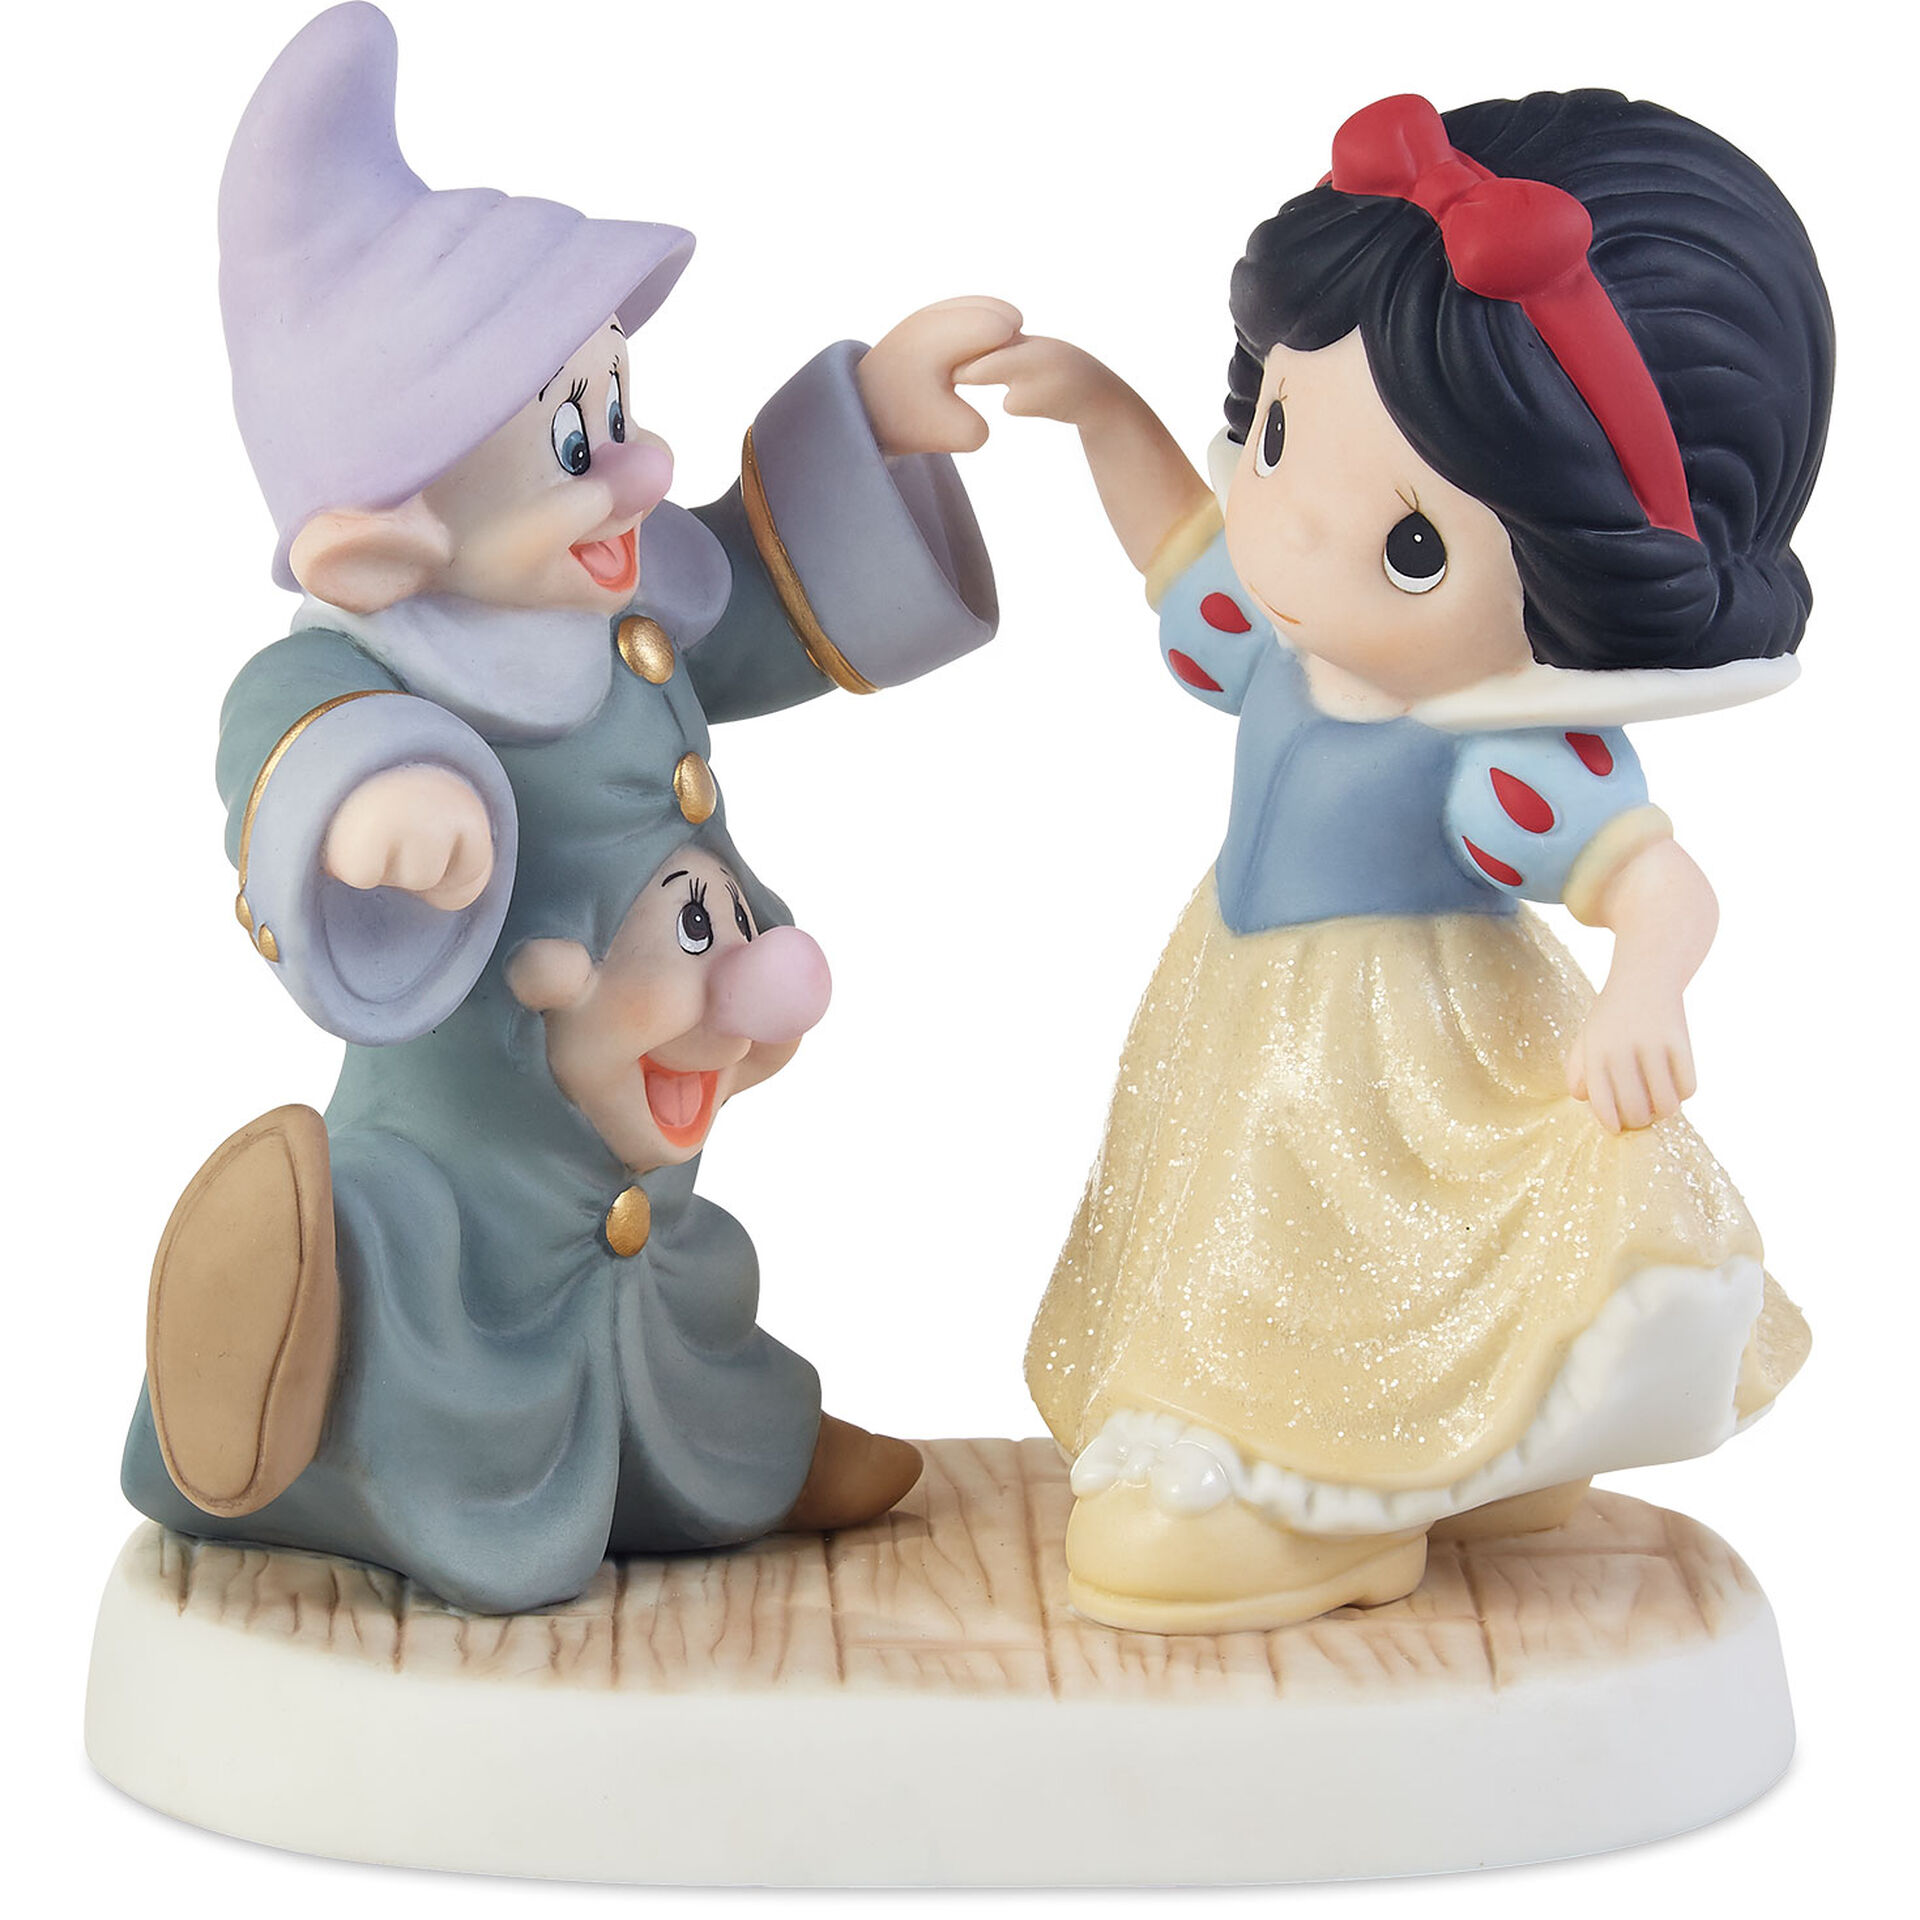 Precious Moments Disney Snow White and Dwarfs Dancing Figurine, 5.5